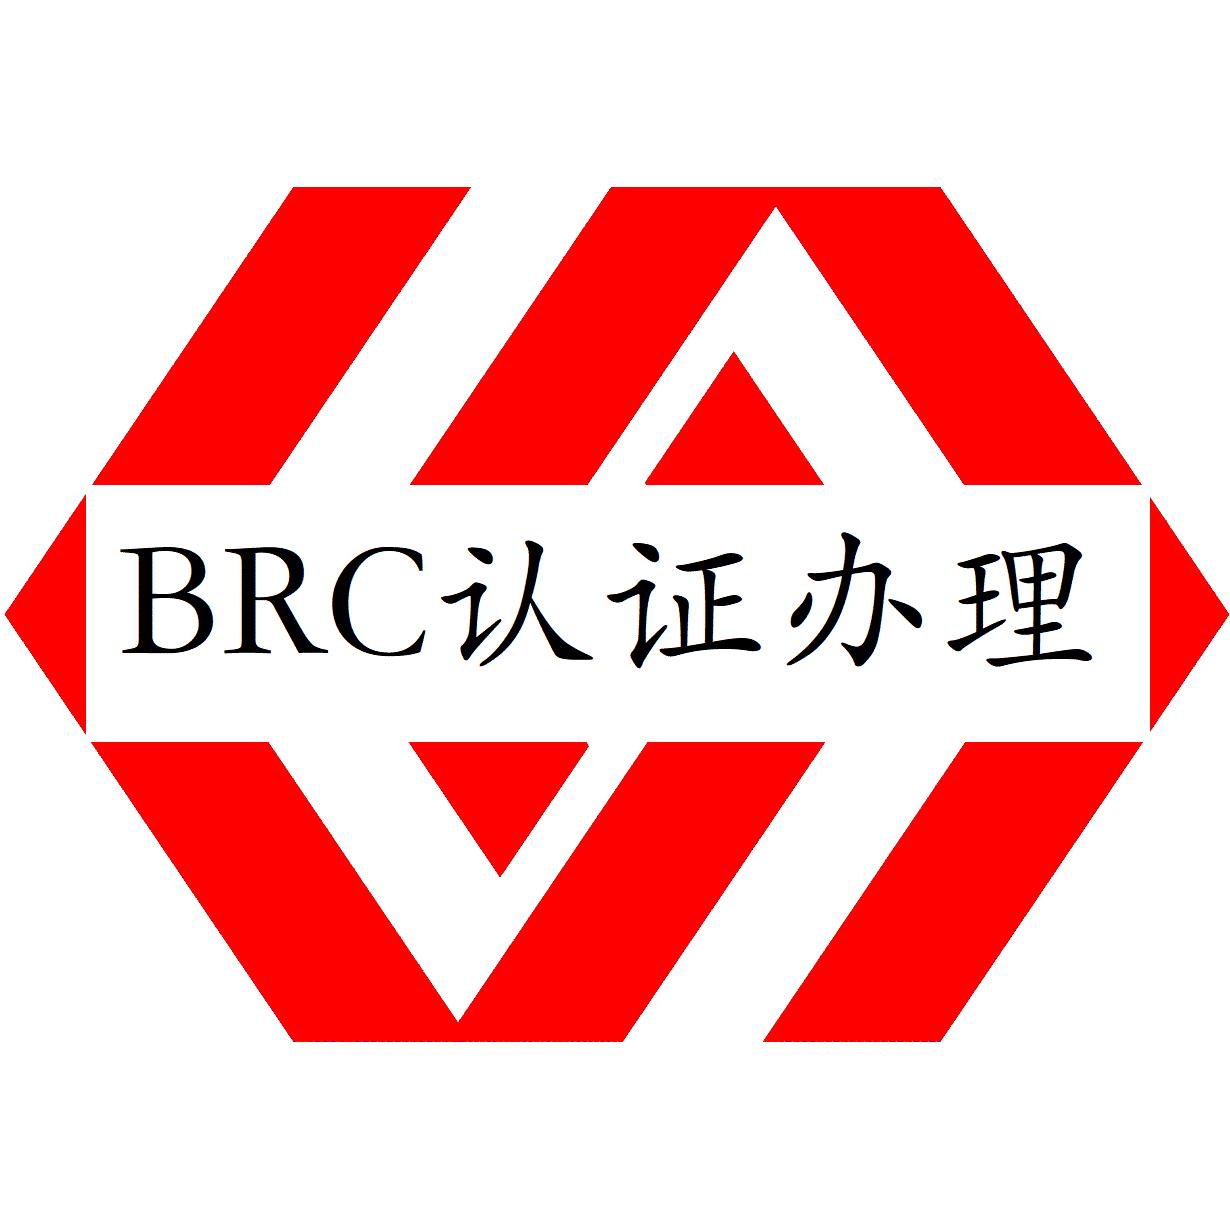 BRC认证是指什么